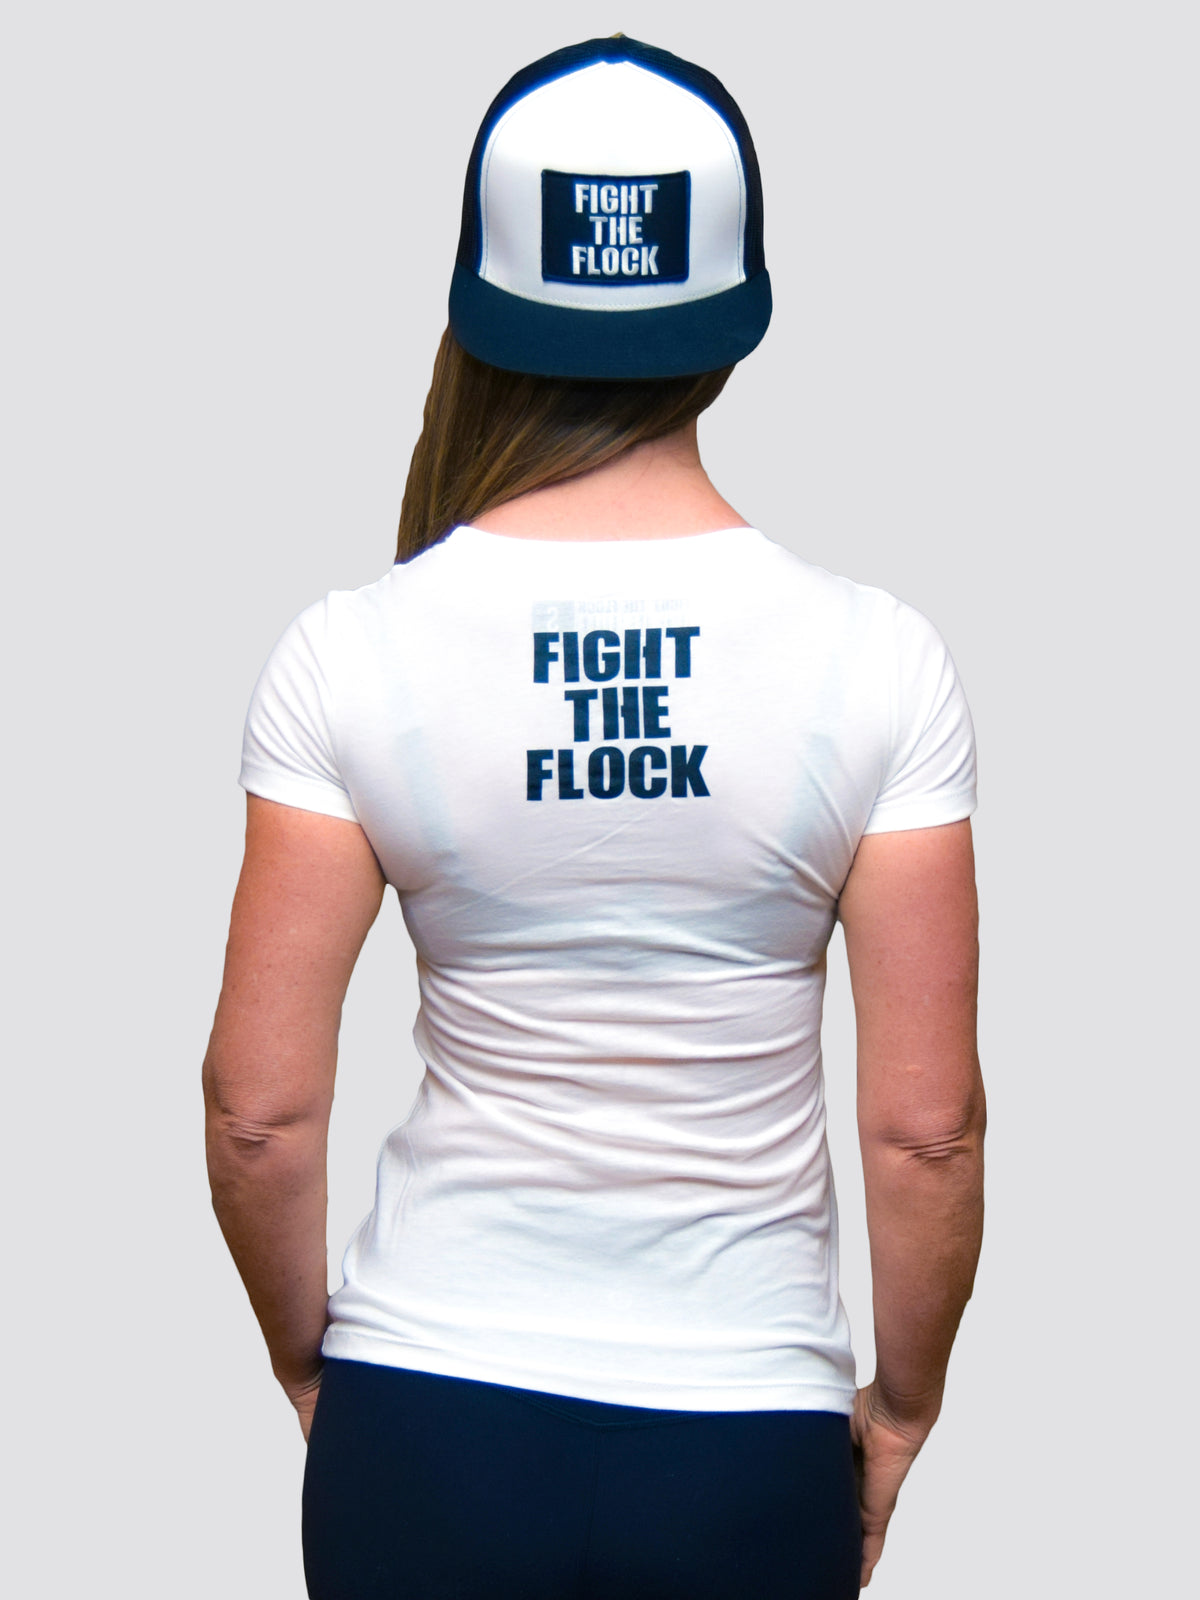 FAITH OVER FEAR (Distressed) Womens Crewneck T-Shirt